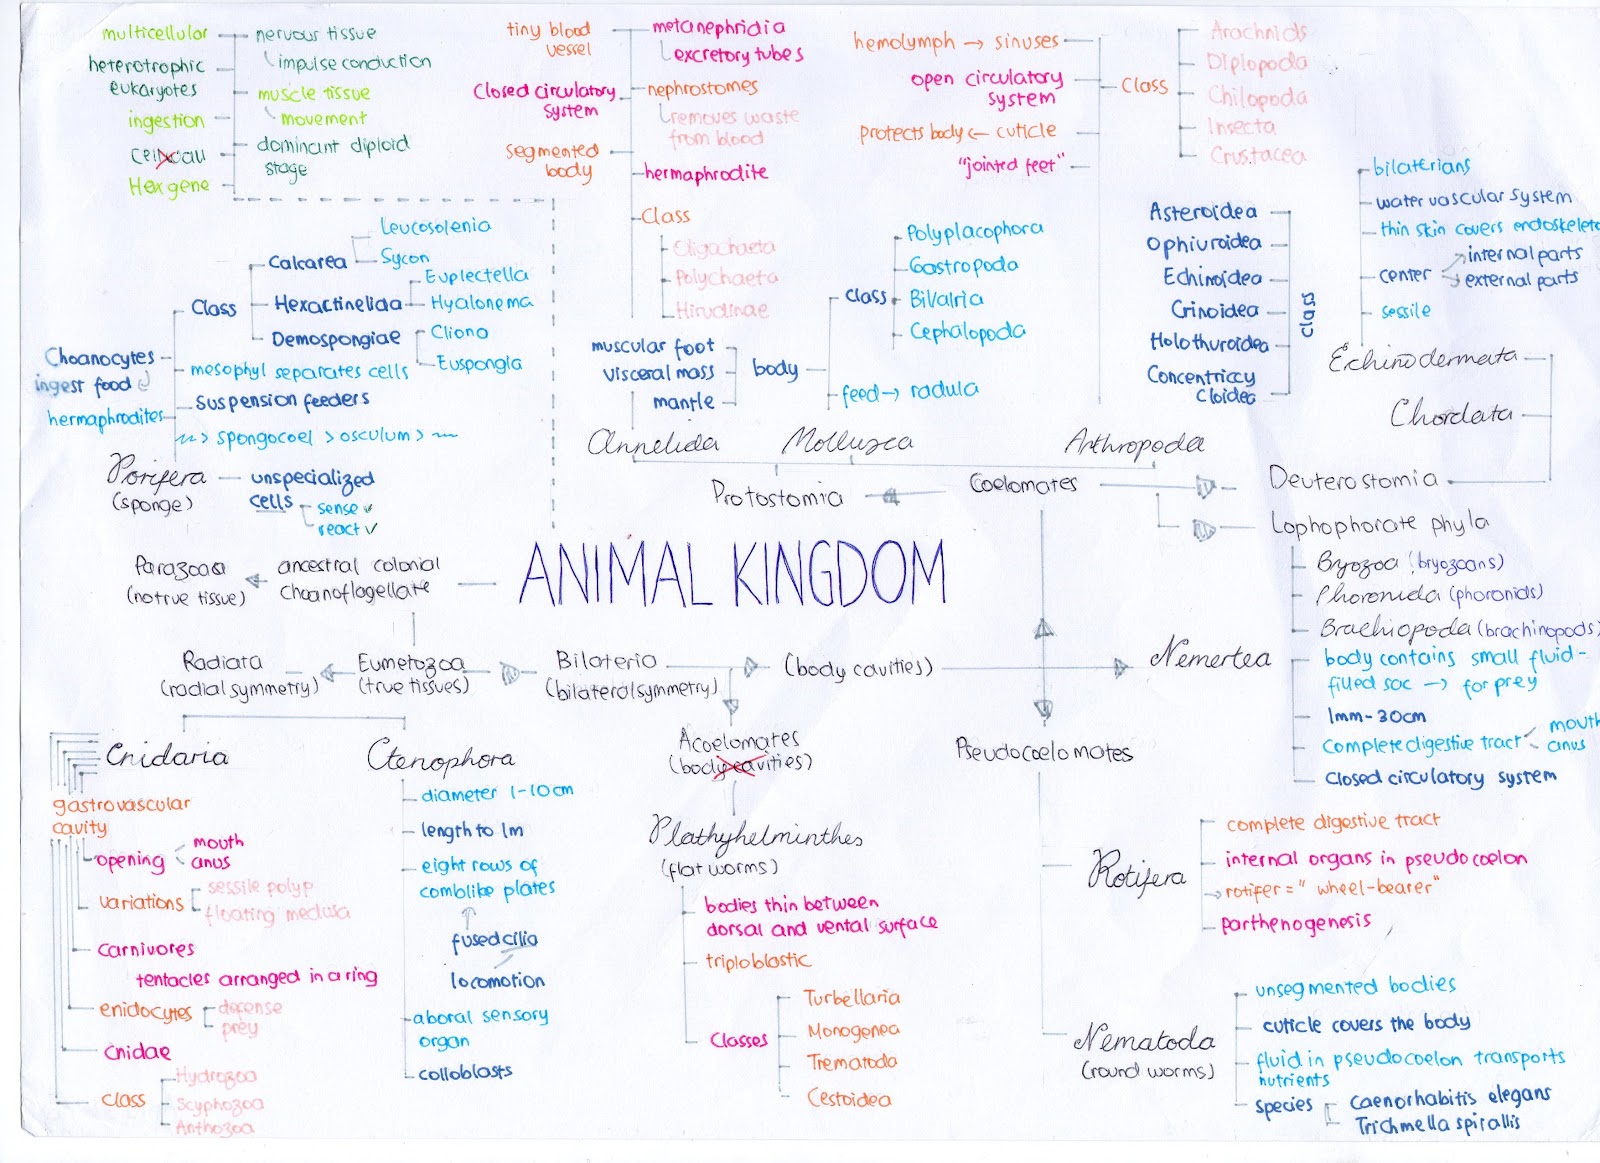 ANIMAL KINGDOM Img025